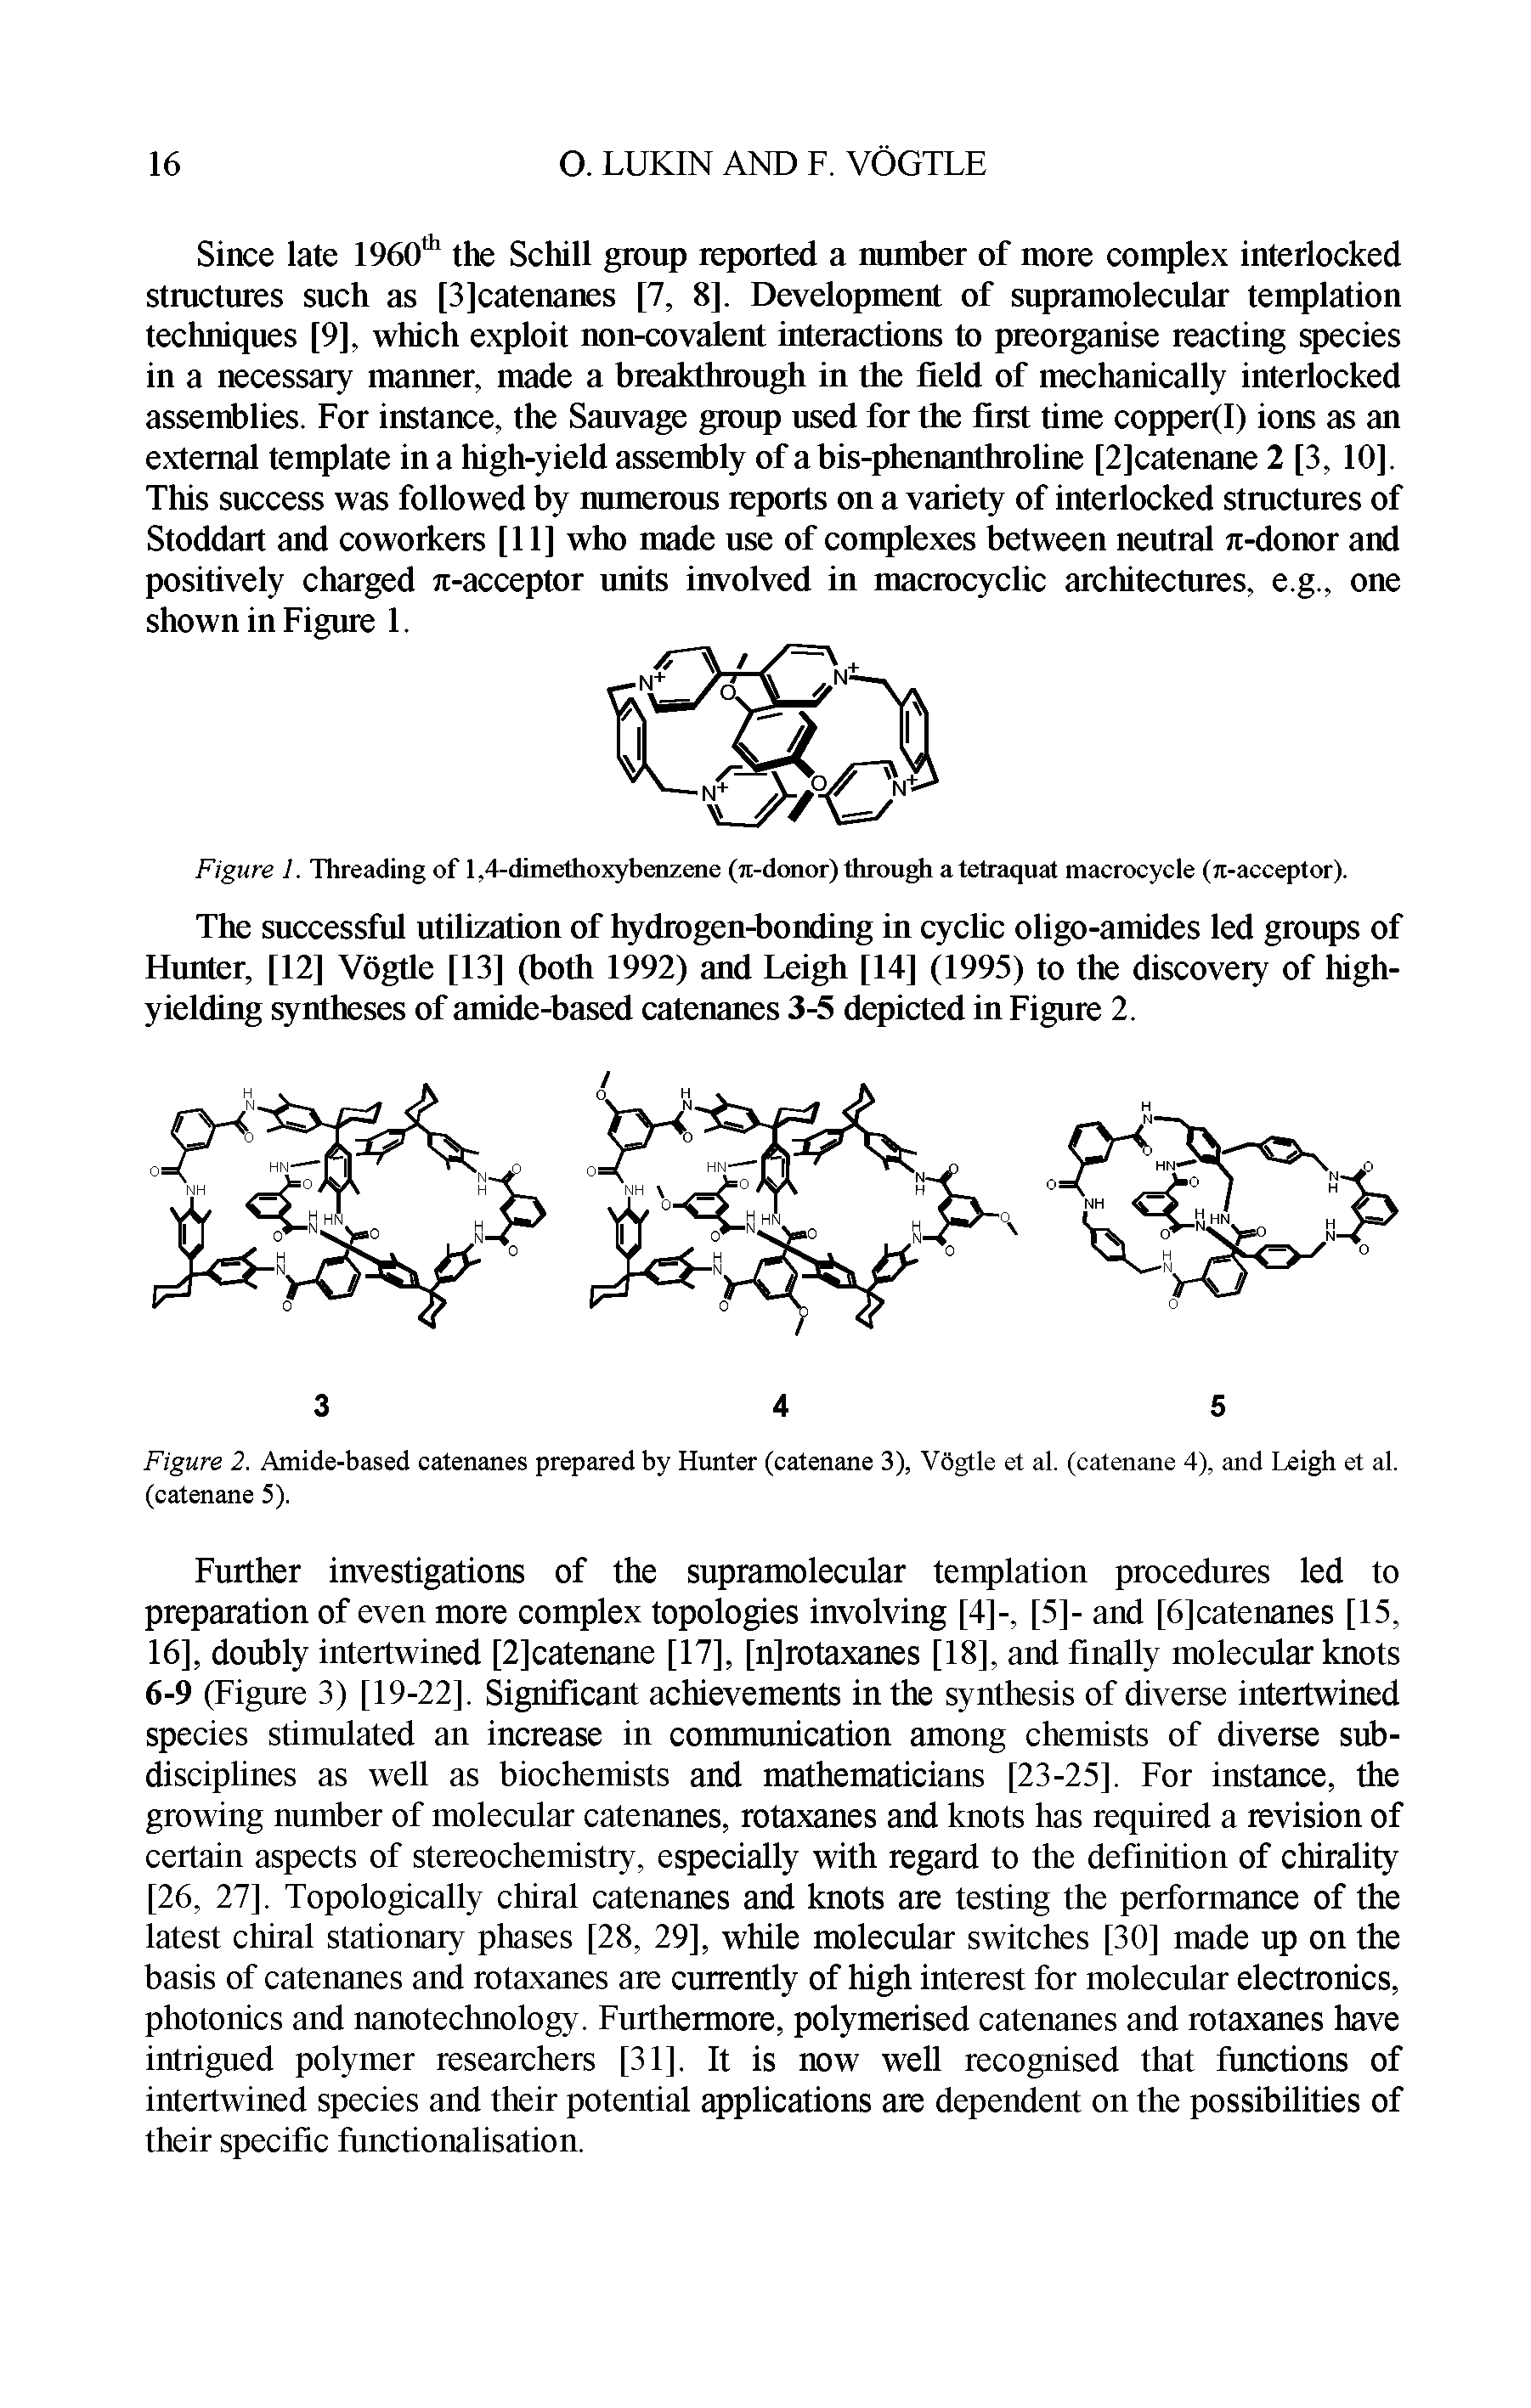 Figure 2. Amide-based catenanes prepared by Hunter (catenane 3), Vogtle et al. (catenane 4), and Leigh et al. (catenane 5).